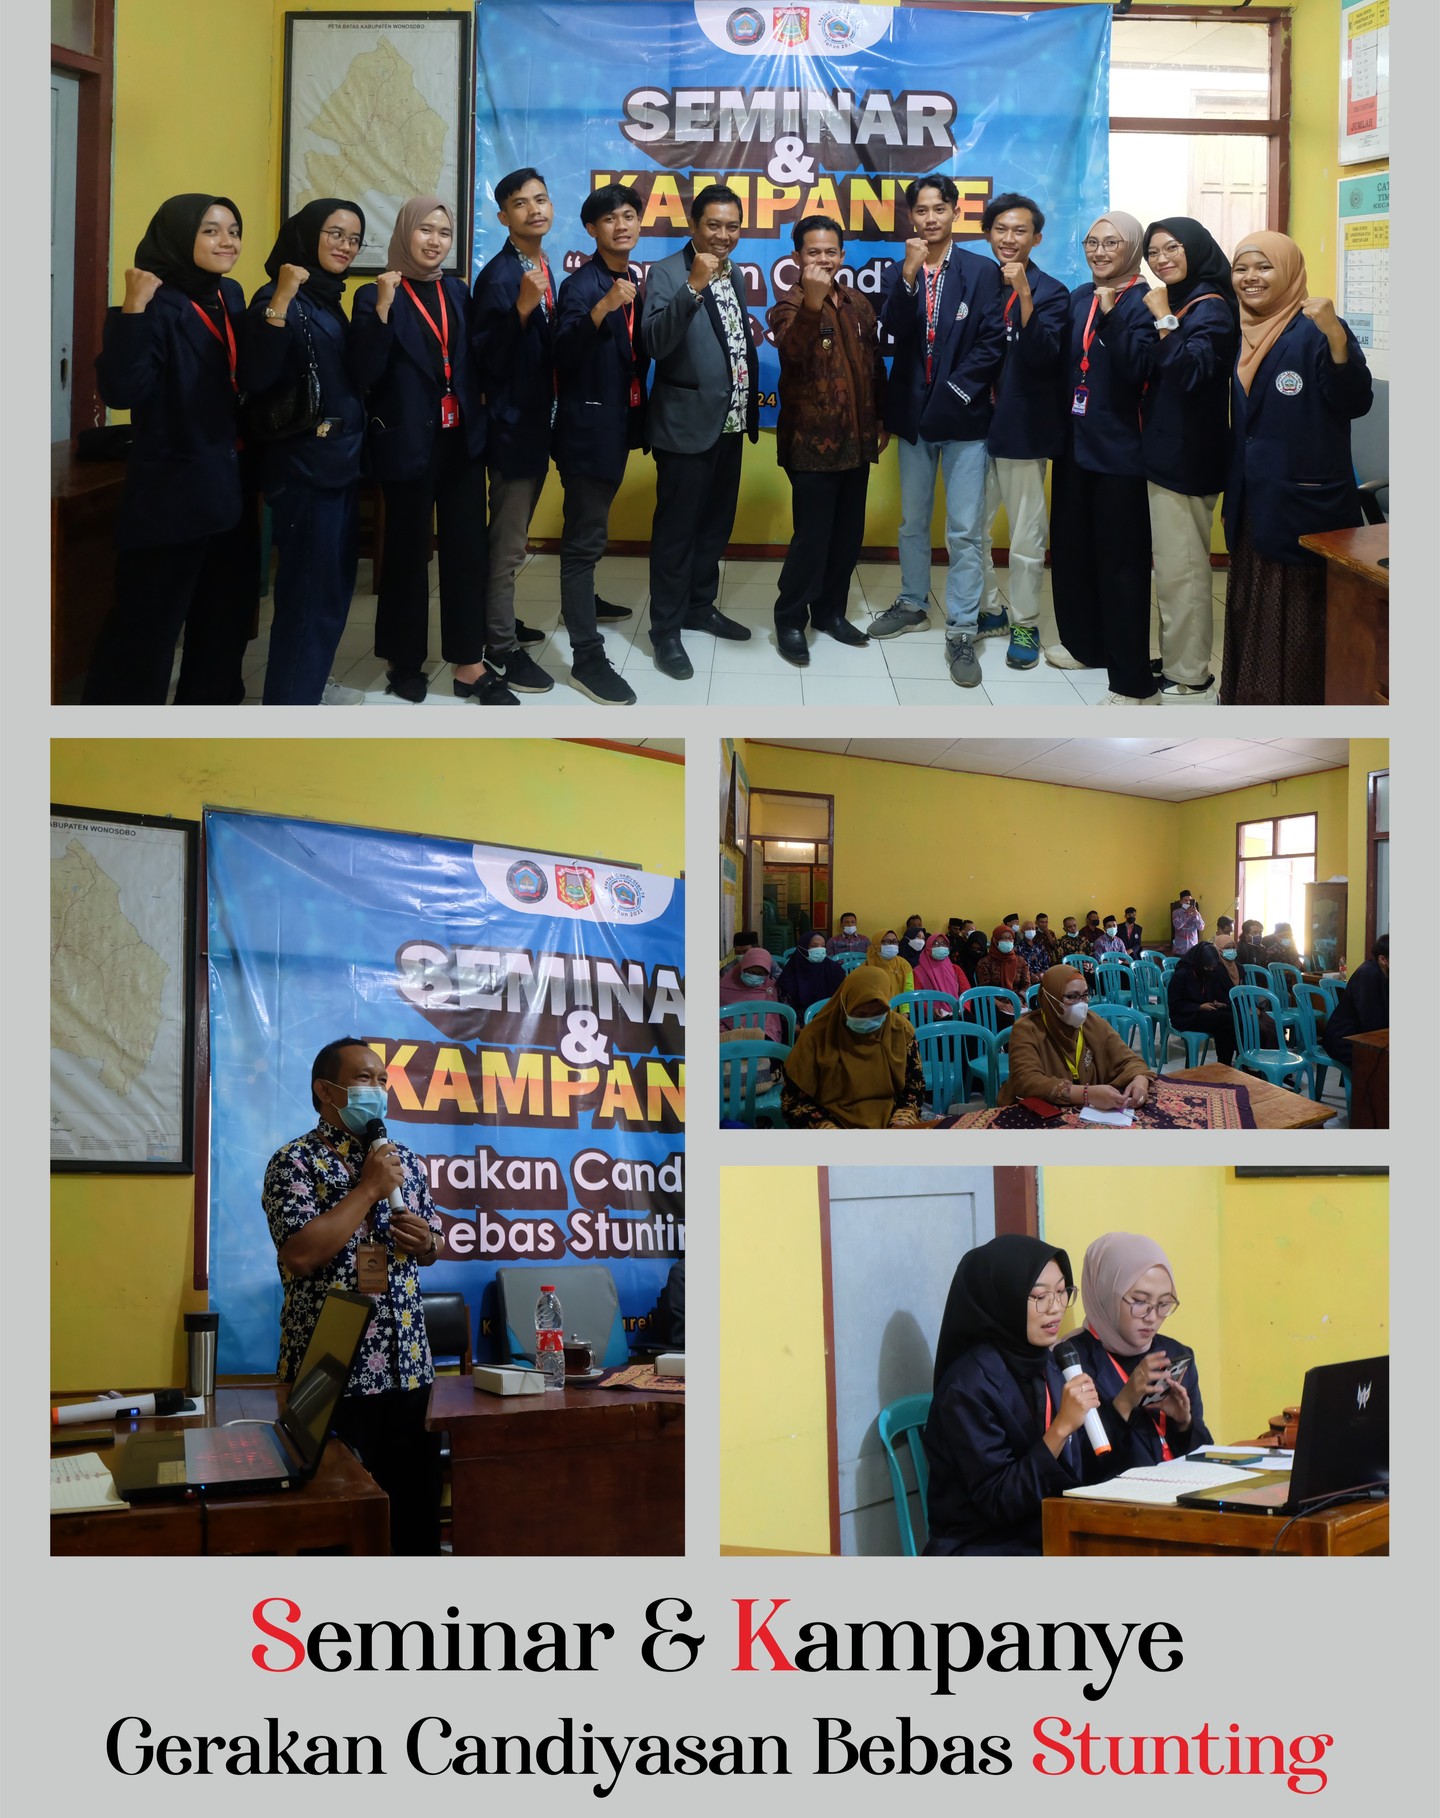 Seminar dan Kampanye Desa Candiyasan "Bebas Stunting" gaess